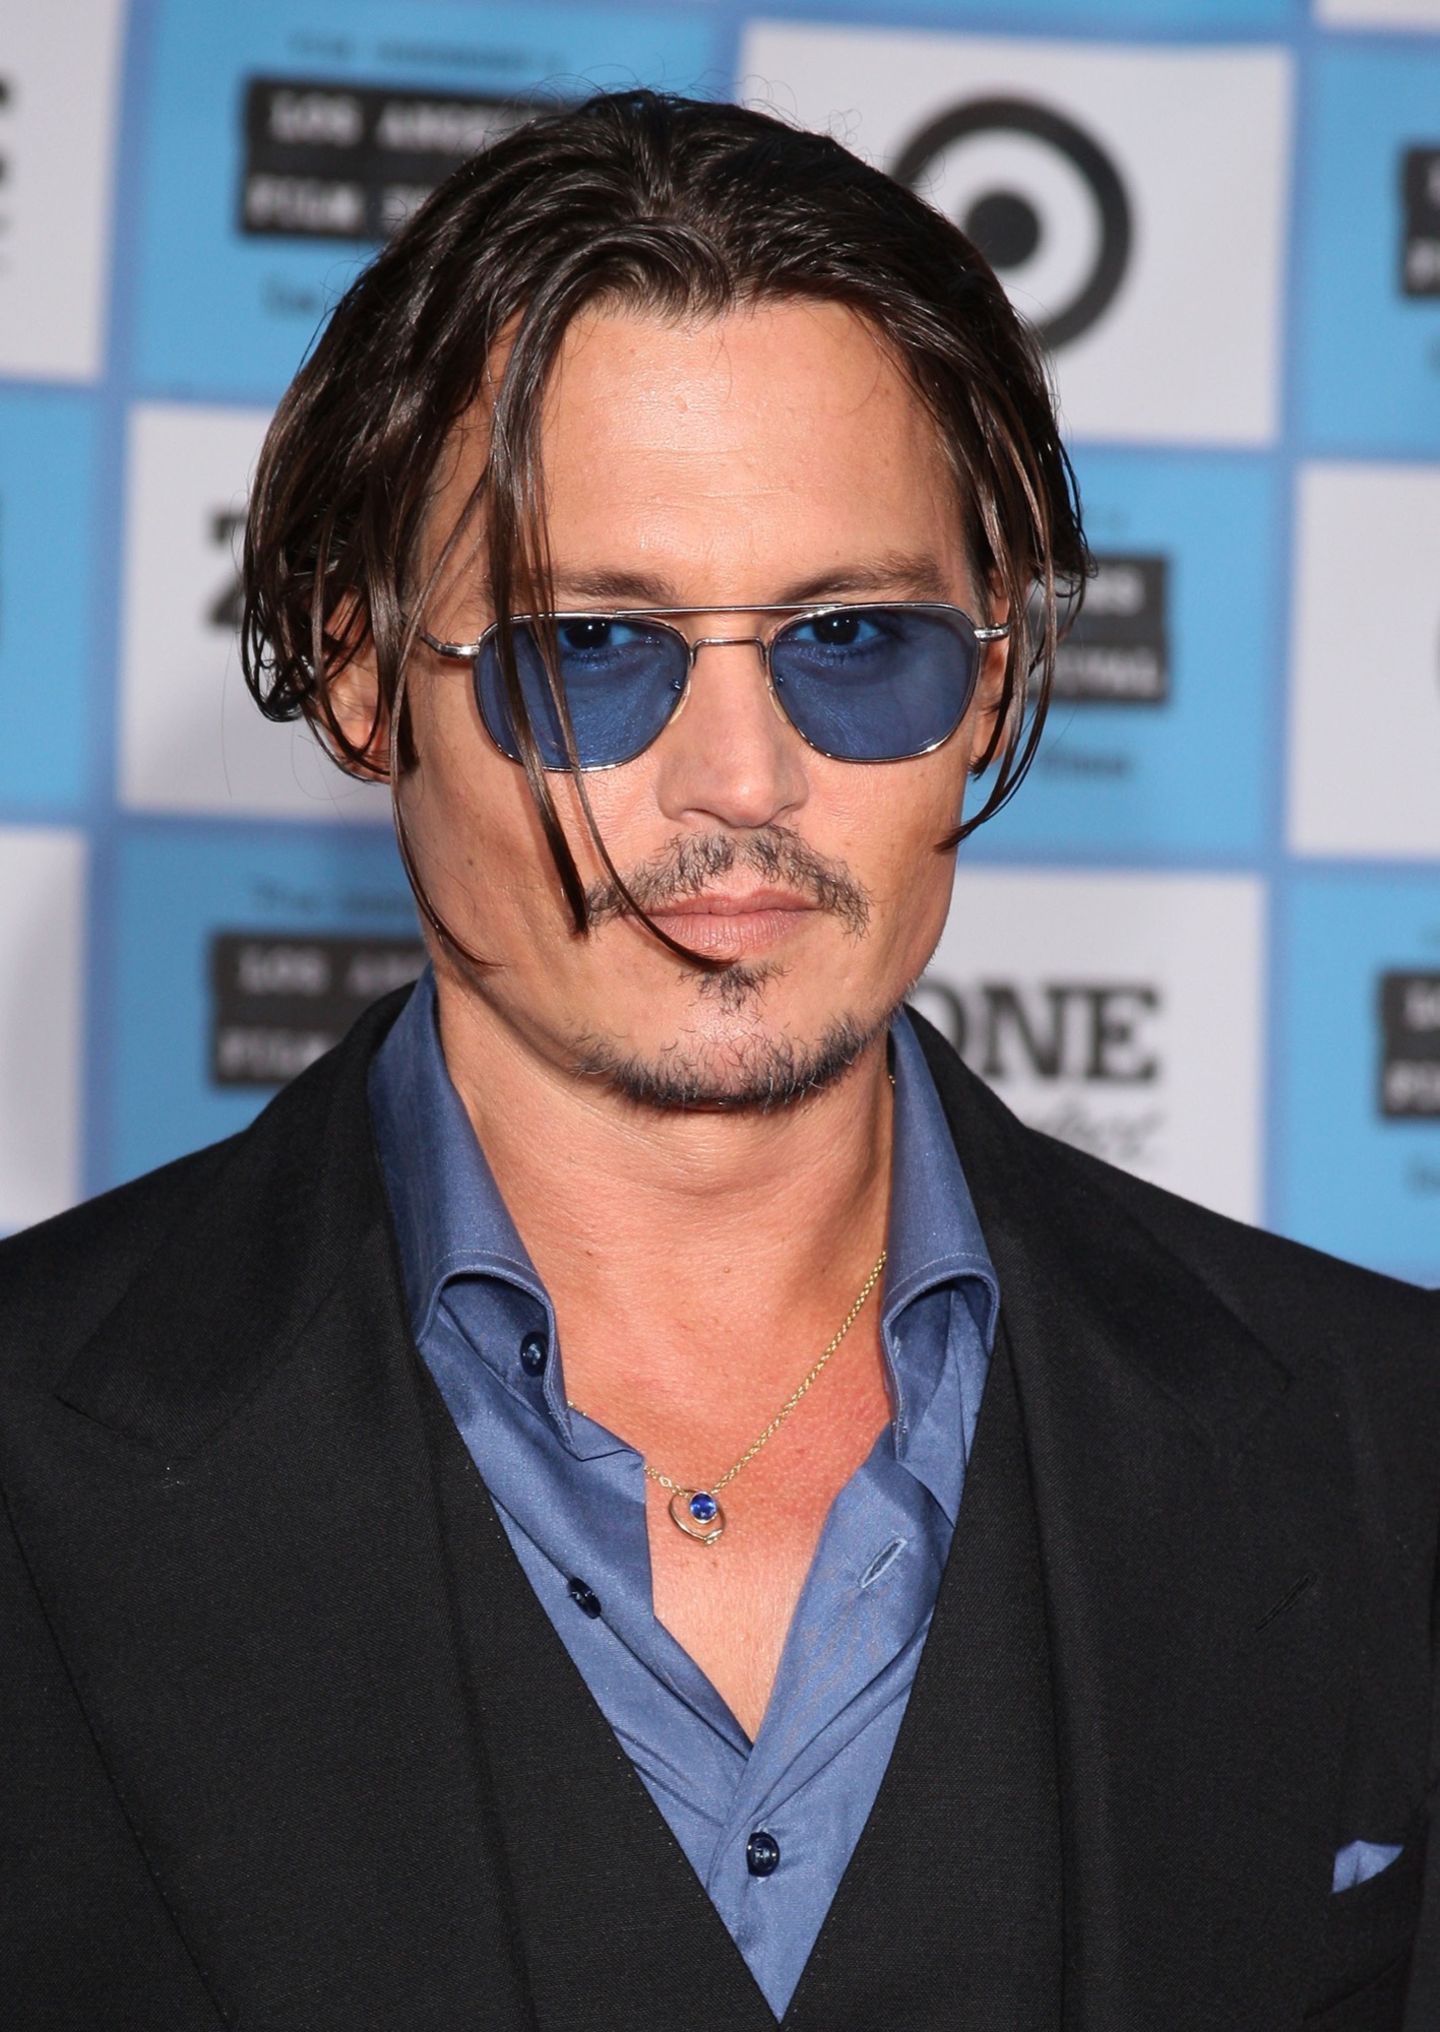 Sexiest Man Alive 2009 - Johnny Depp